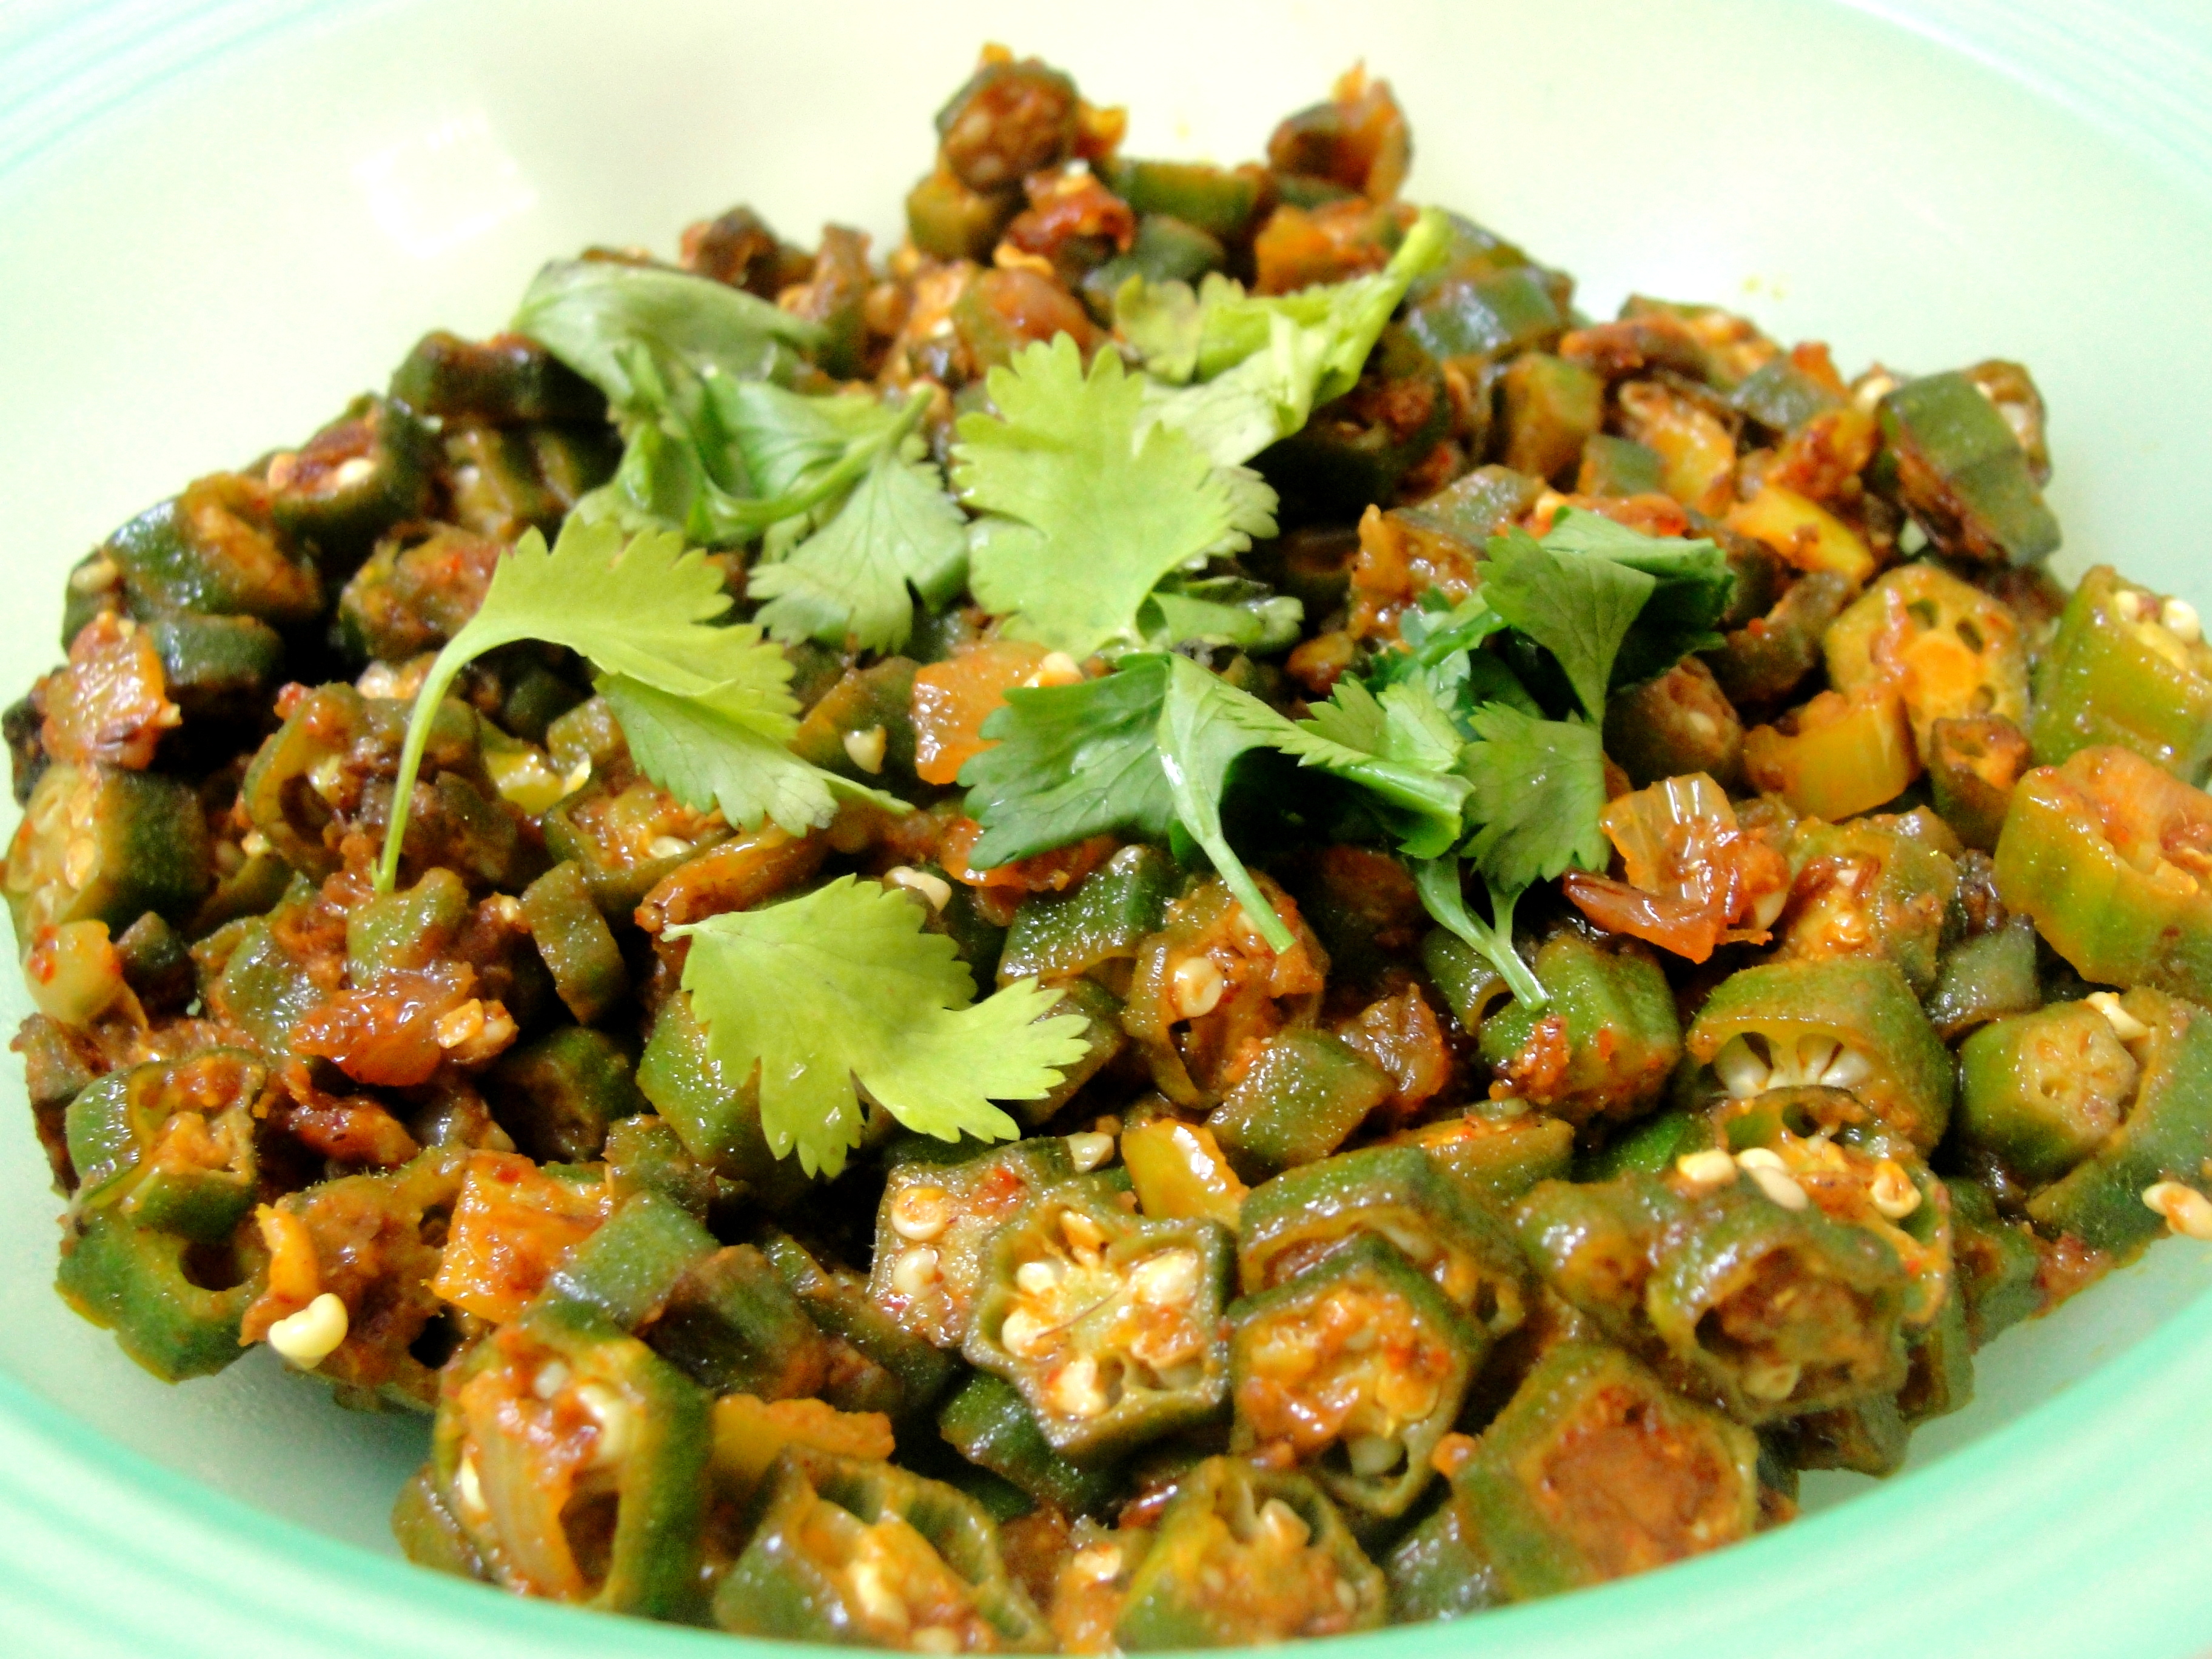 How to Make Jhatpat Bhindi (Okra Based Indian Vegetable Dish)